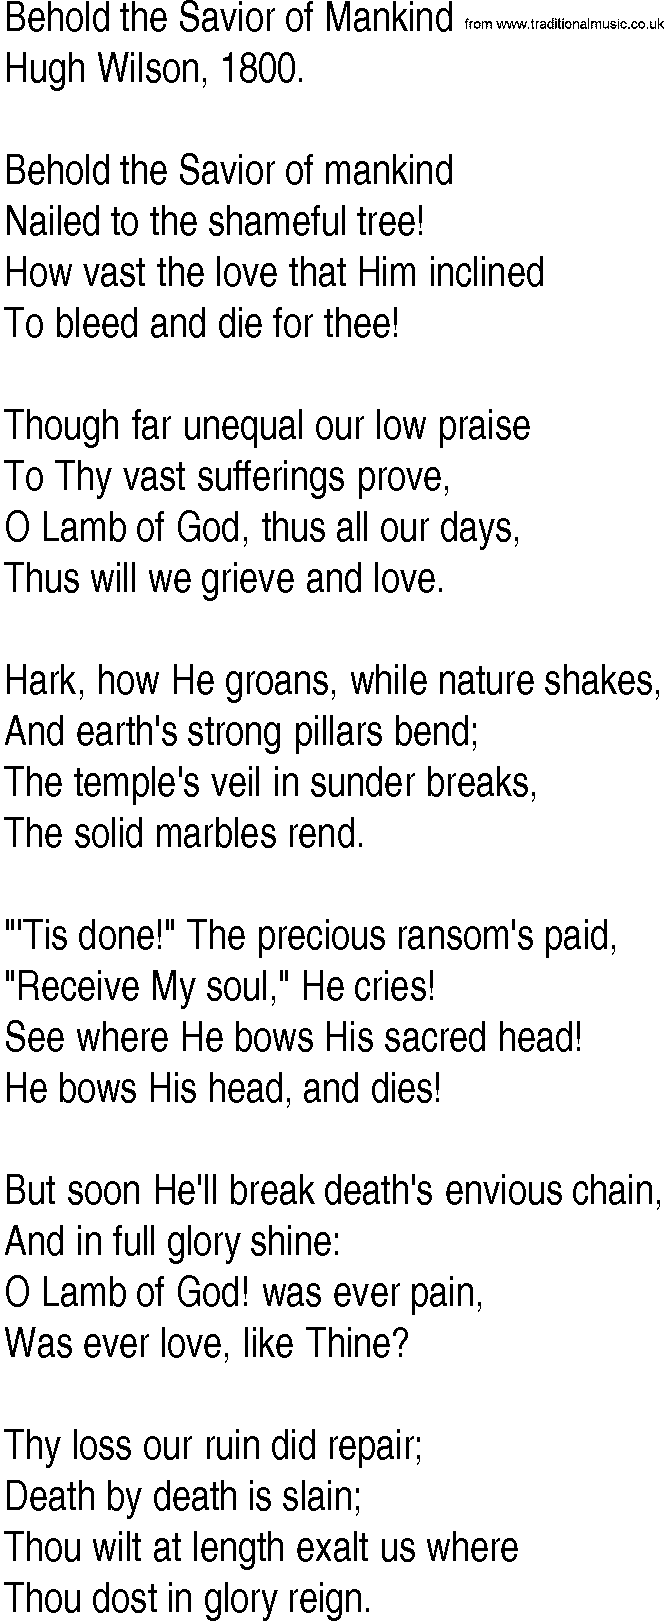 Hymn and Gospel Song: Behold the Savior of Mankind by Hugh Wilson lyrics